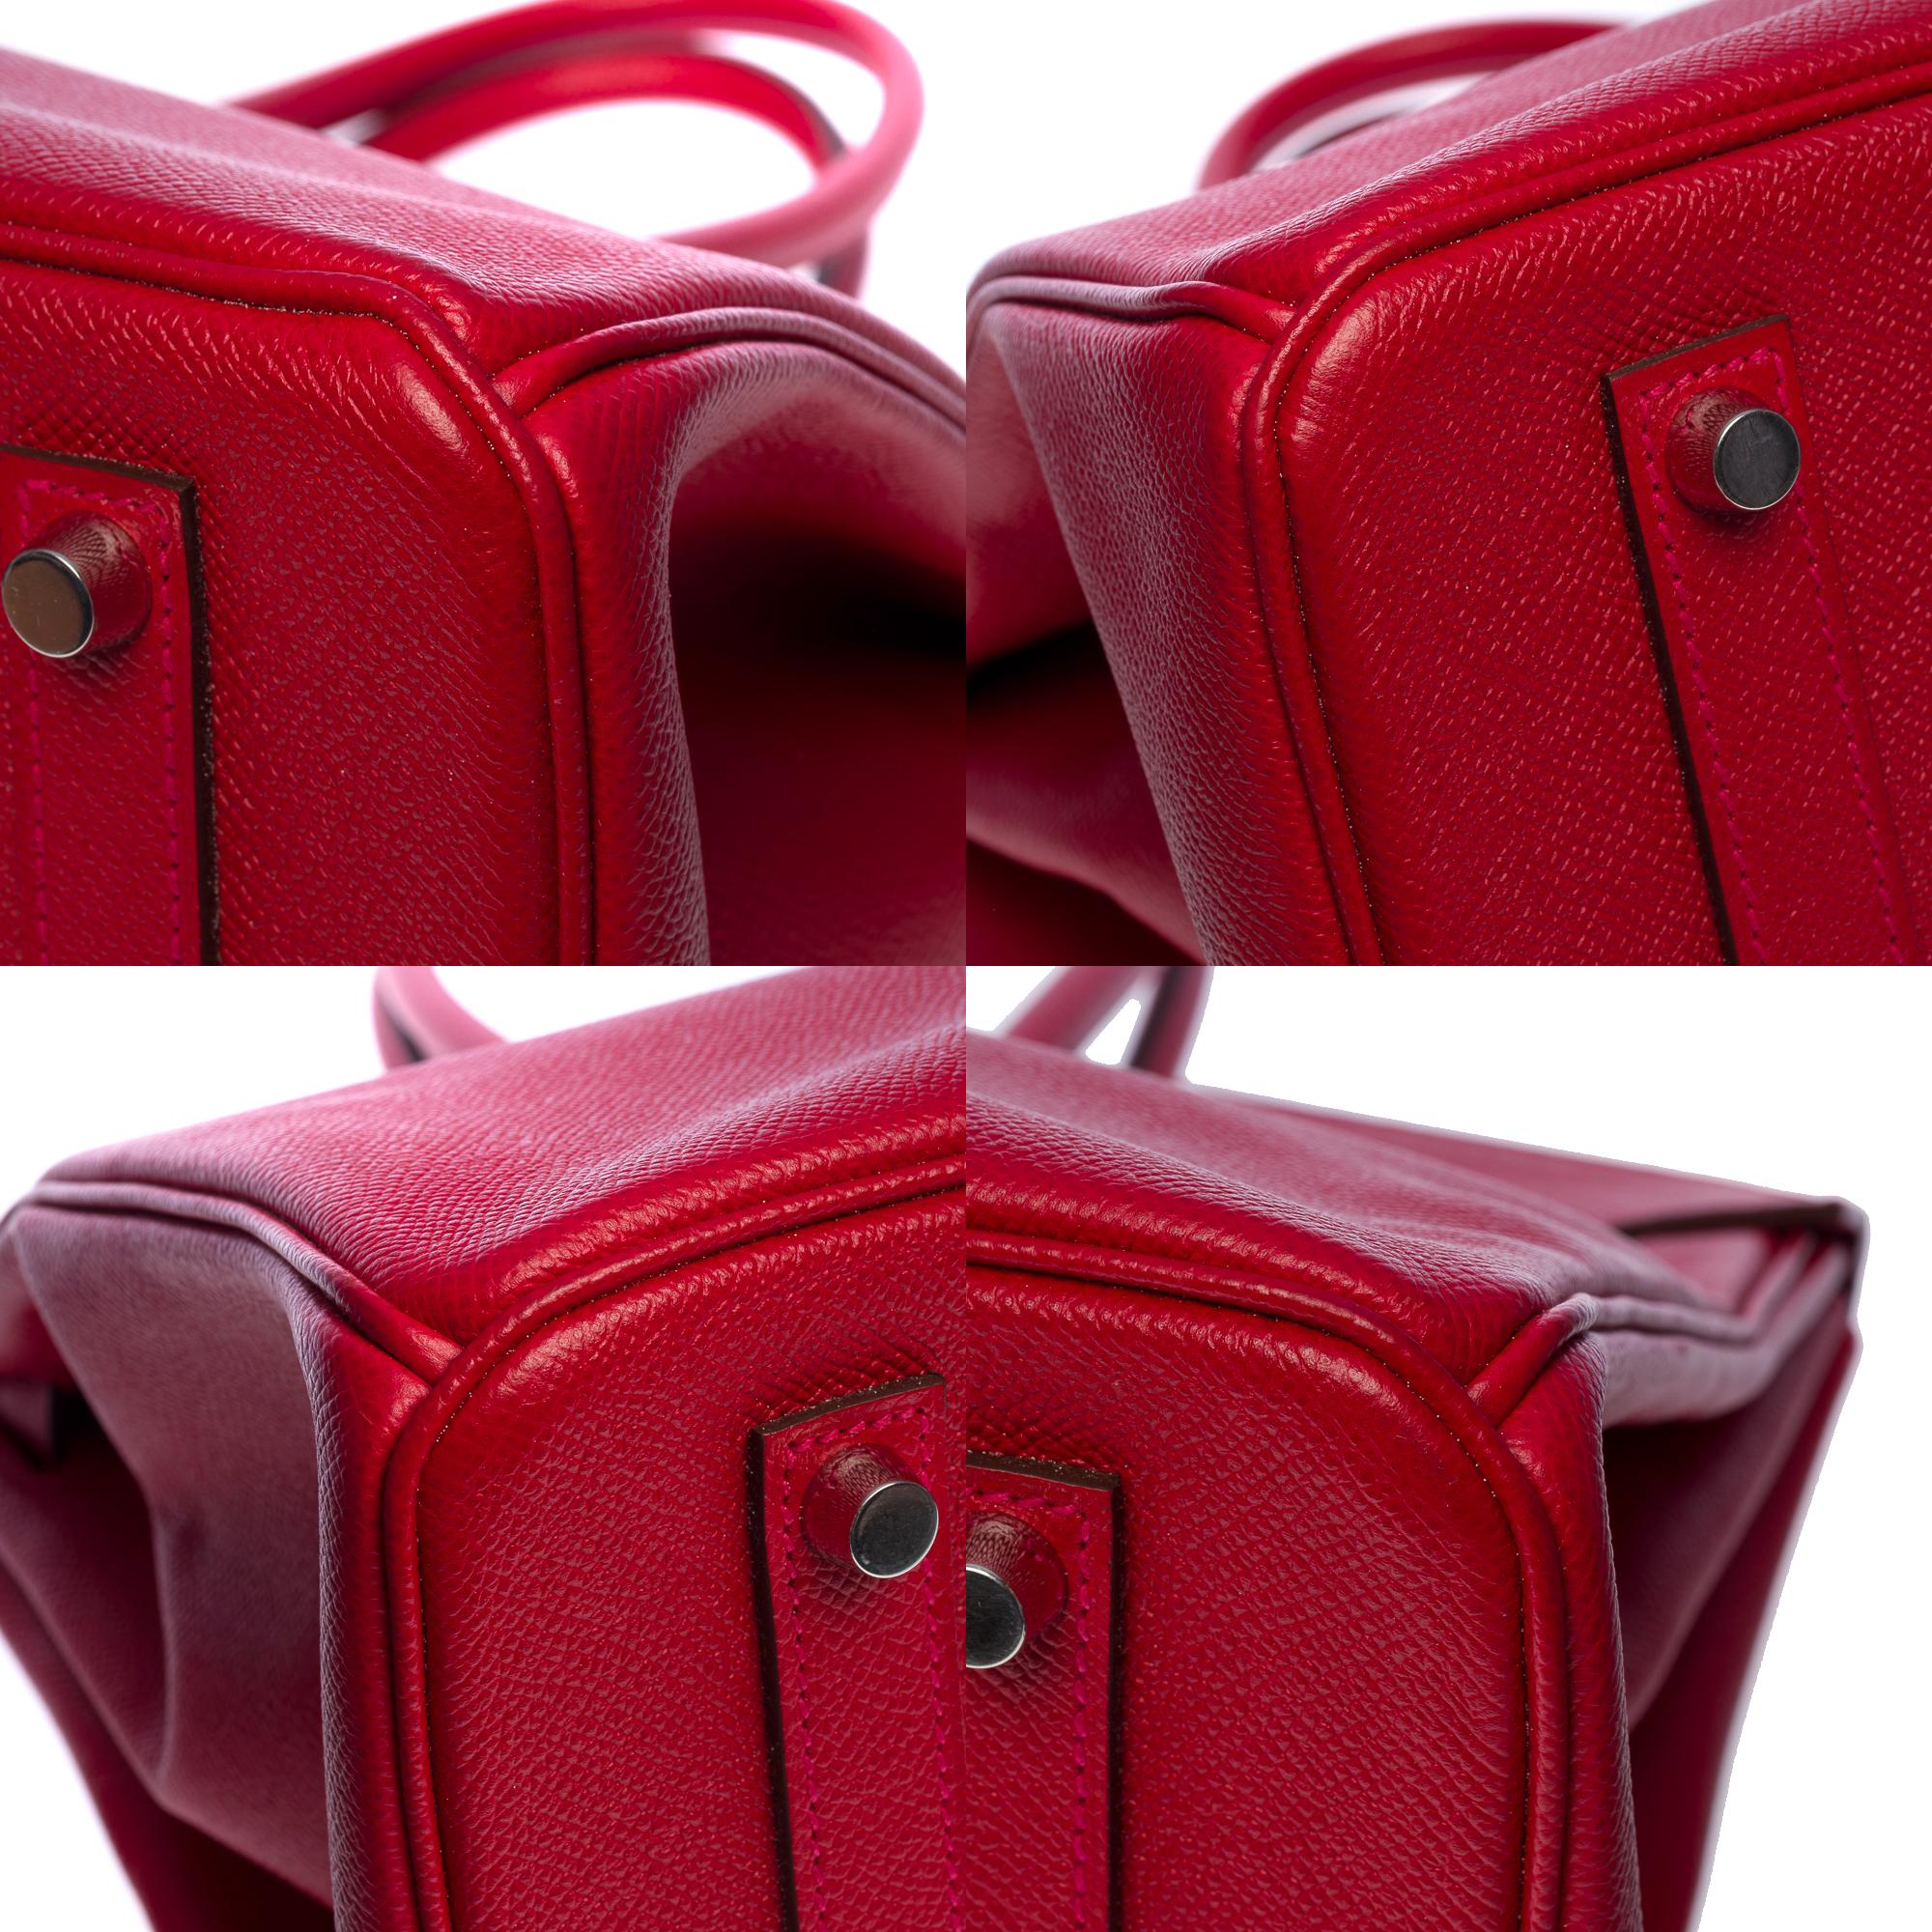 Stunning Hermès Birkin 35 handbag in Rouge Casaque Epsom leather, SHW 6